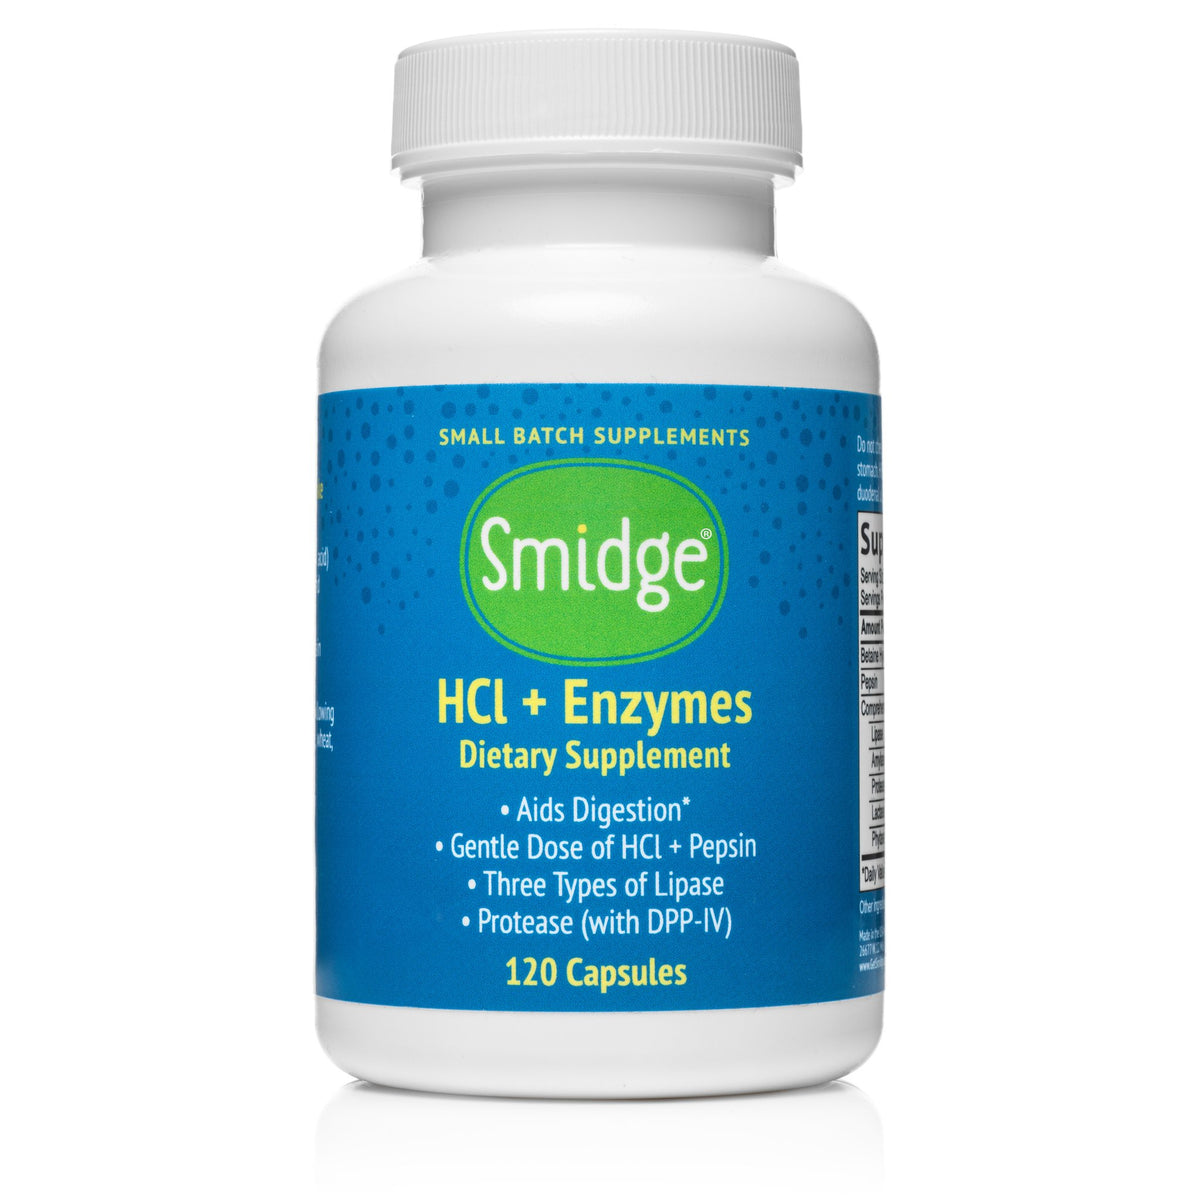 Smidge HCL + Enzymes